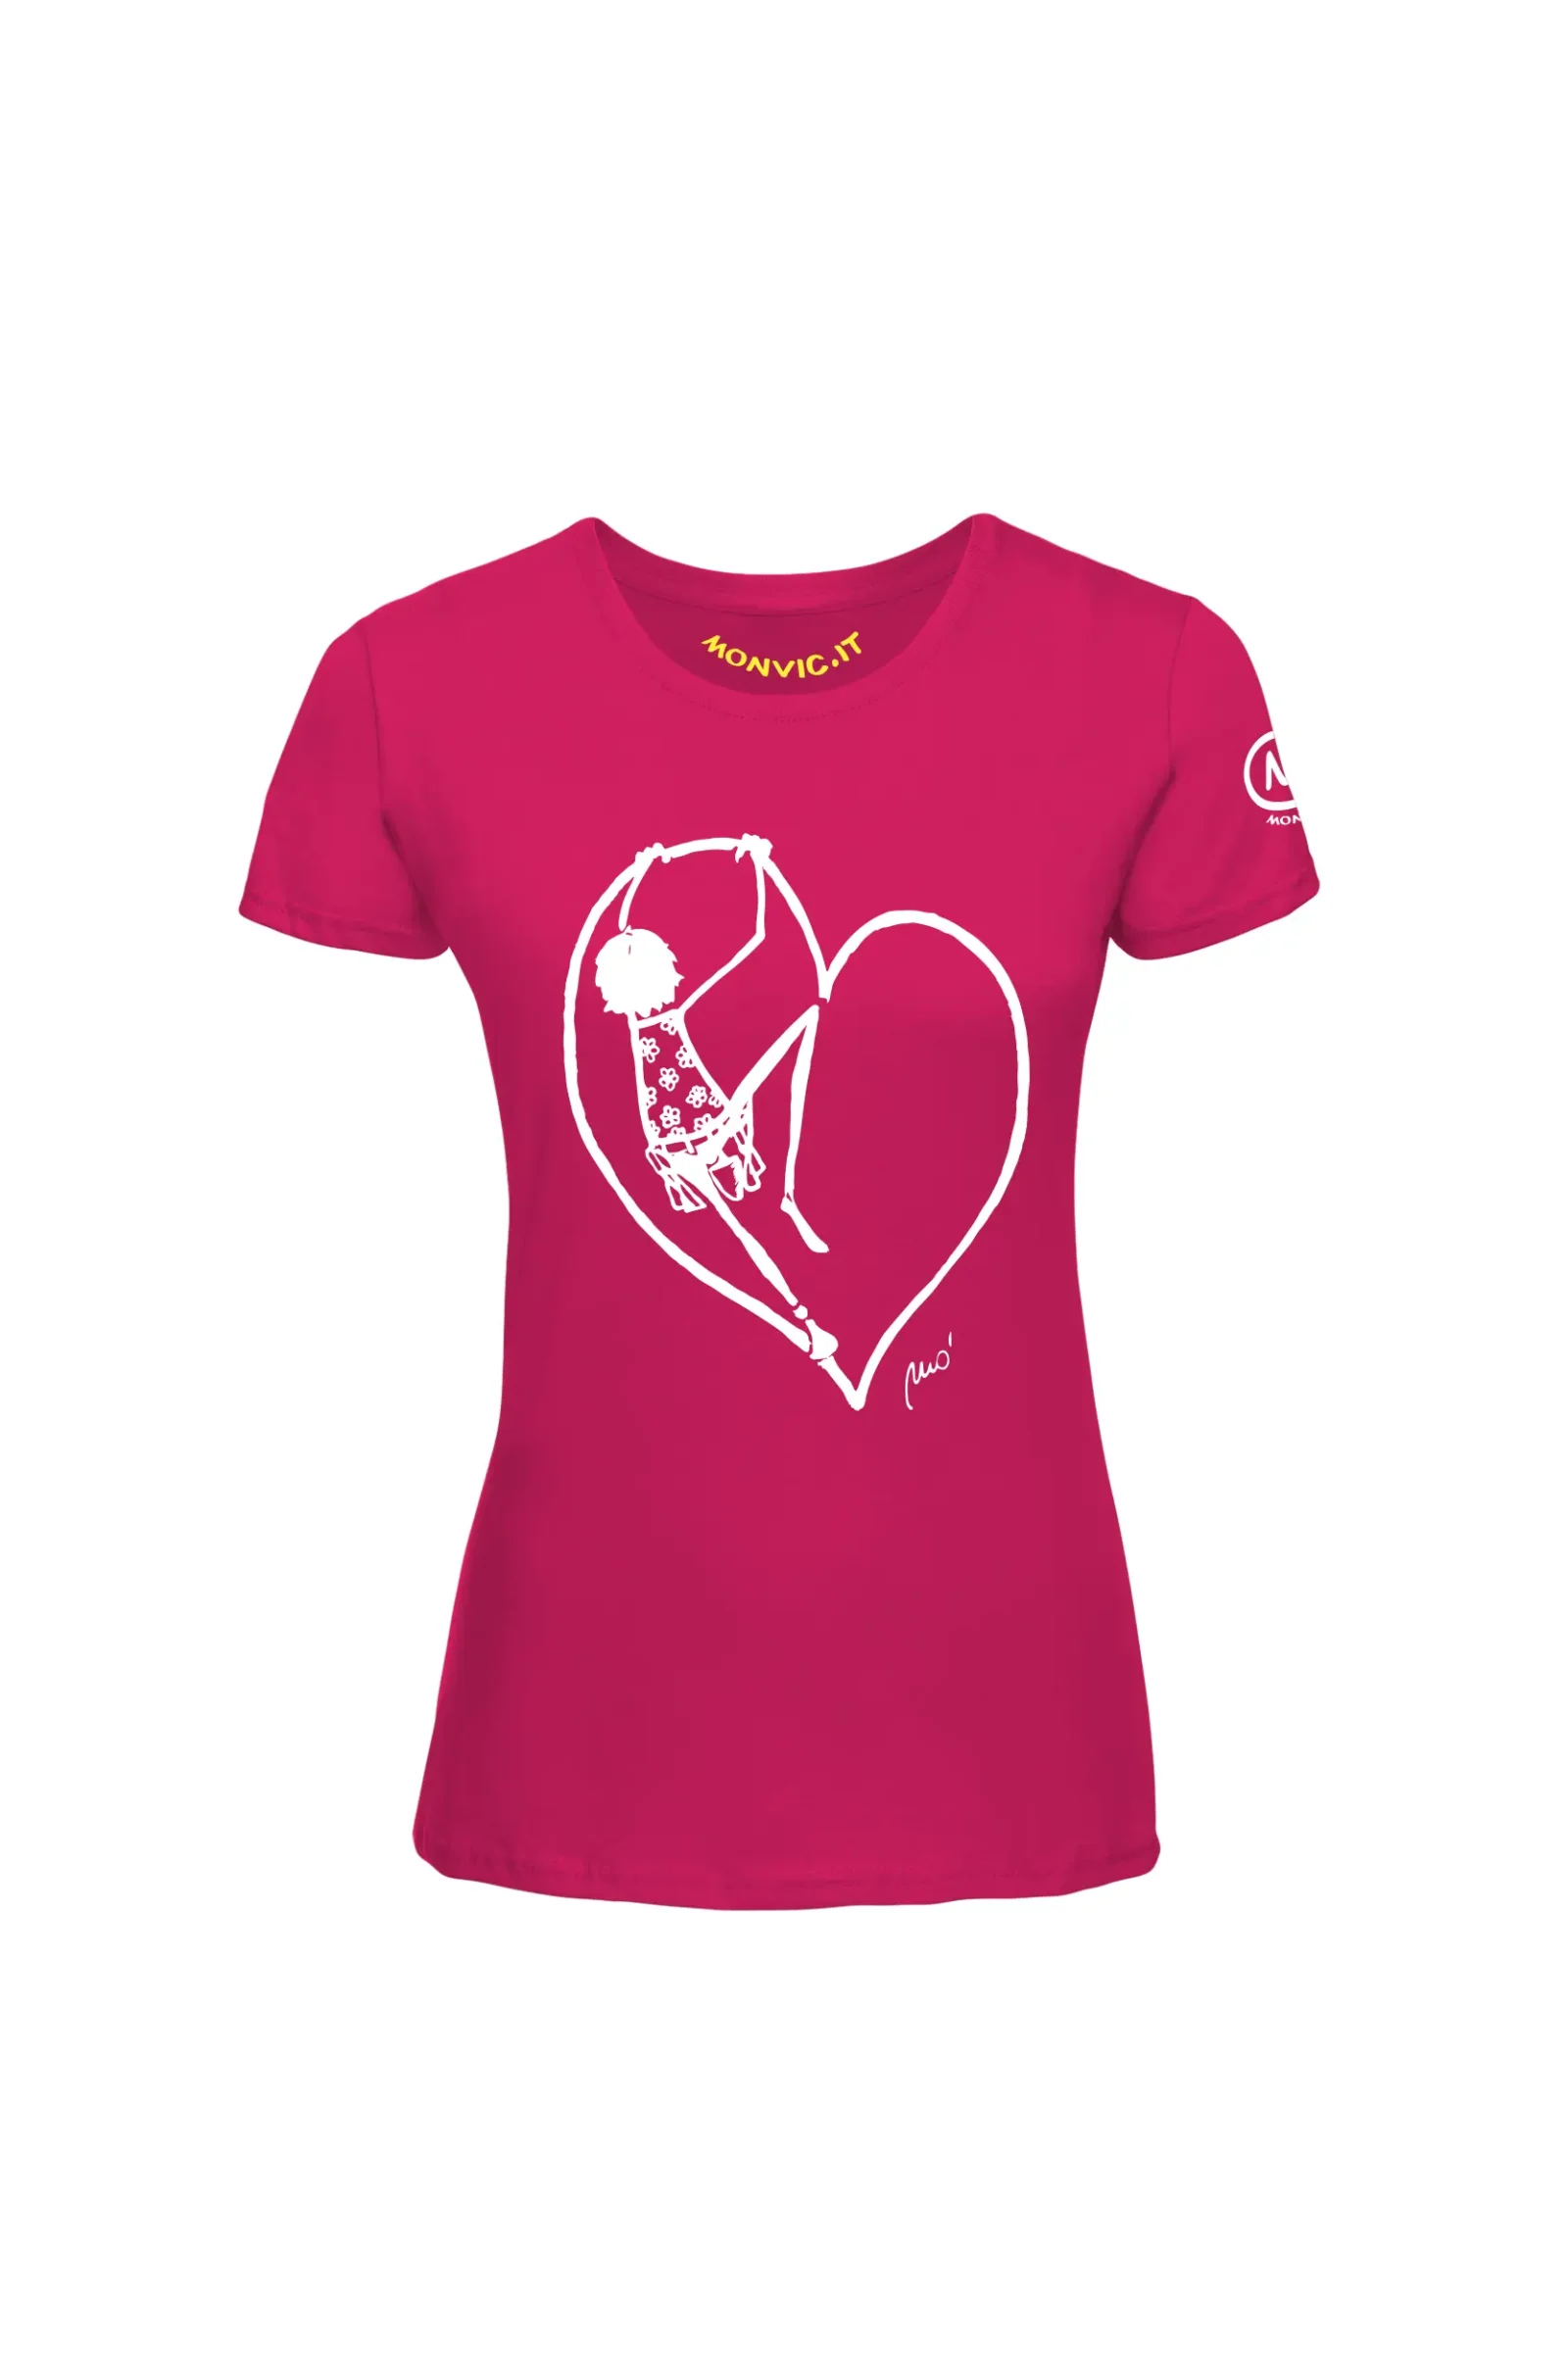 Women's climbing t-shirt - fuchsia cotton - "Pina" graphic - SHARON by MONVIC